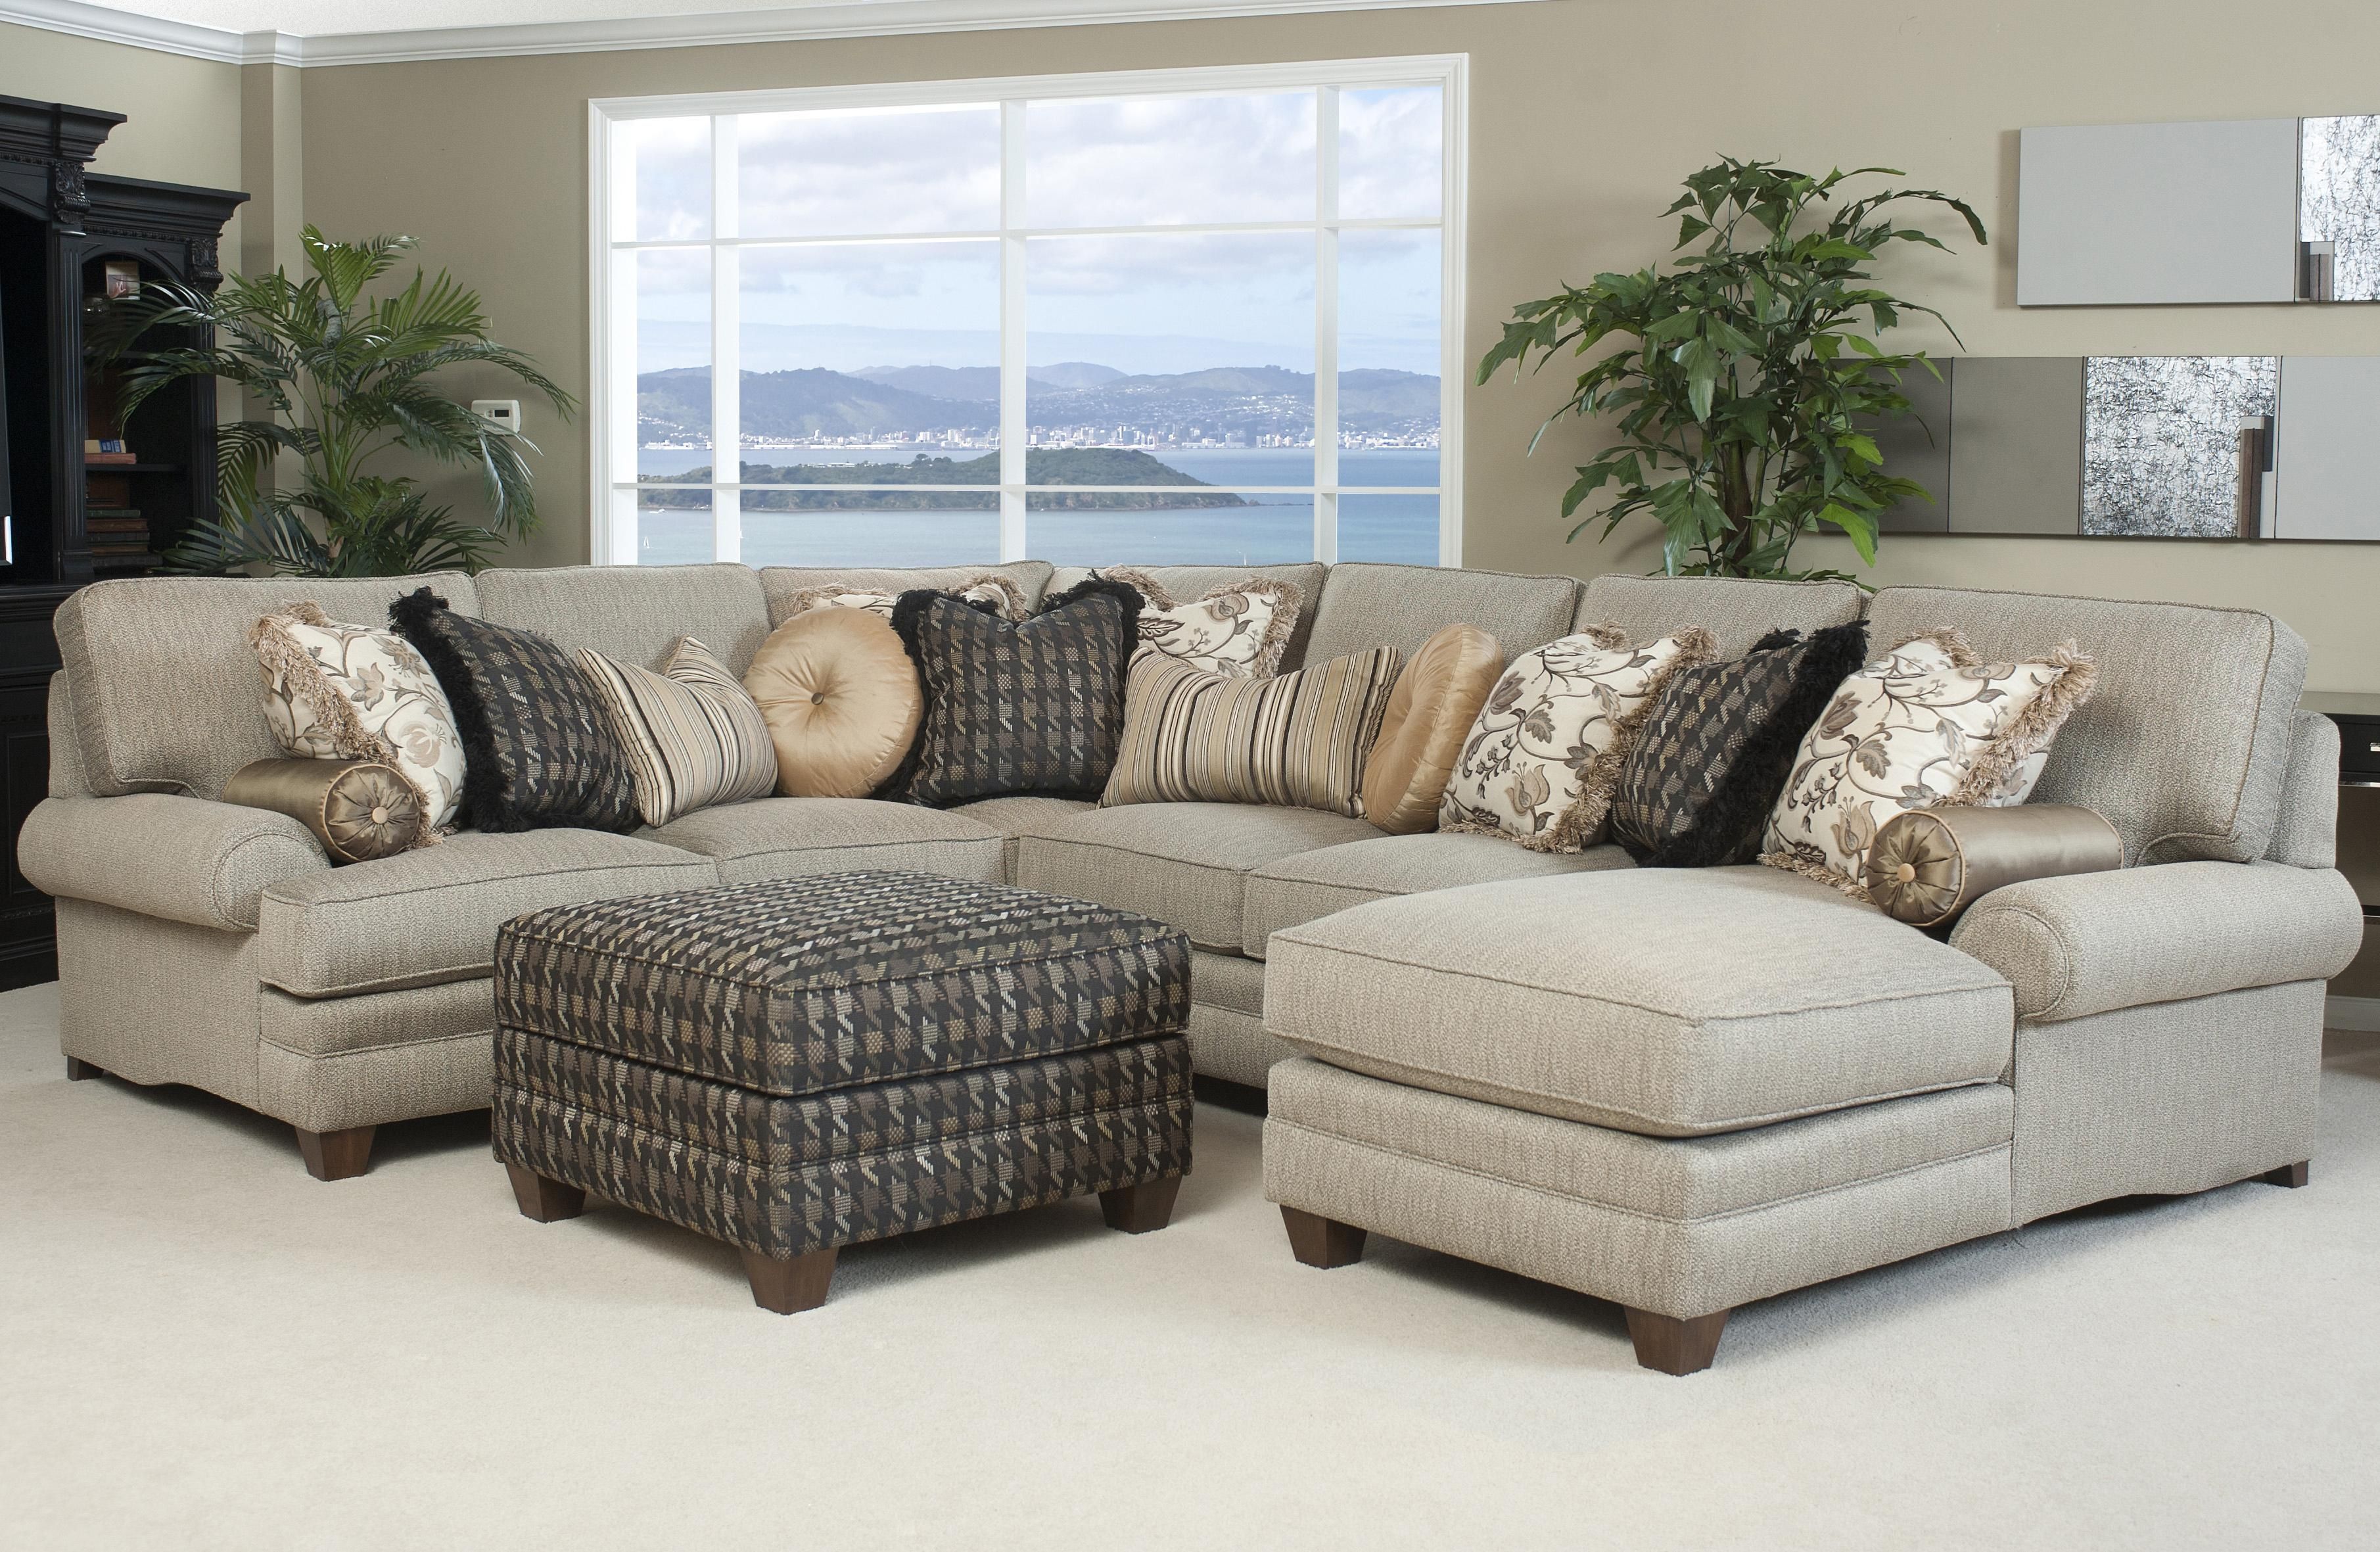 Sofa pictures. Decor Sofa Camelgroup. Красивые диваны. Диван с мягкими подушками. Подушка для дивана.